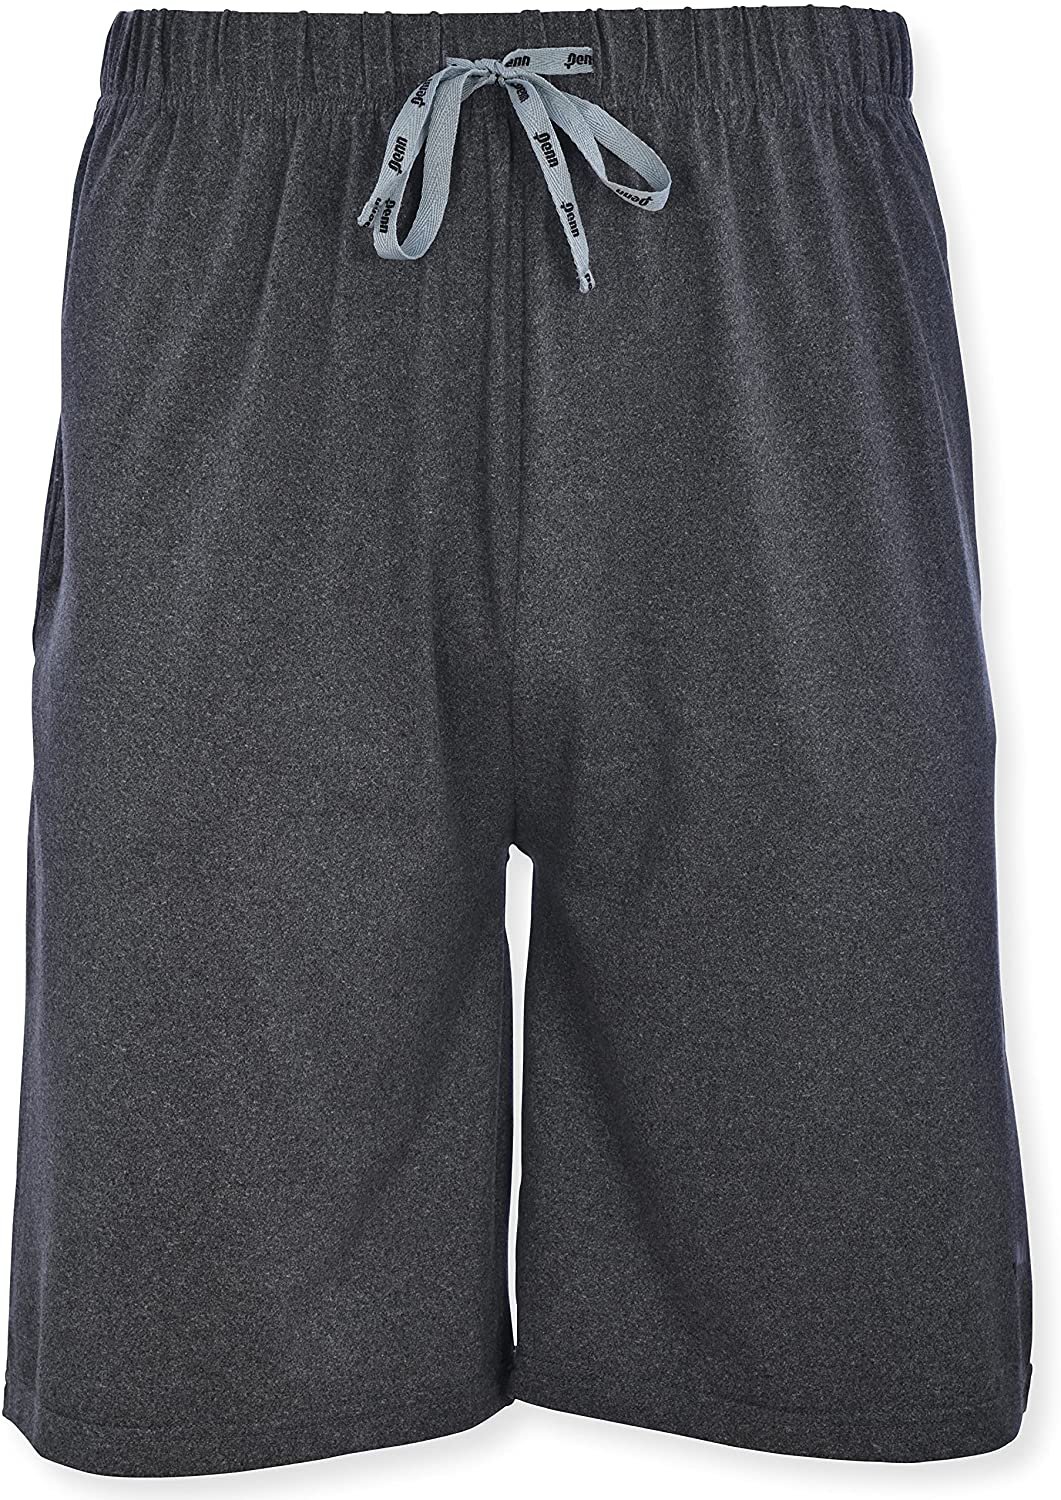 AGFAN Women Pajama Shorts Lounge Pants with Pockets Drawstring Sleep Bottoms Comfy Casual Athletic Shorts 